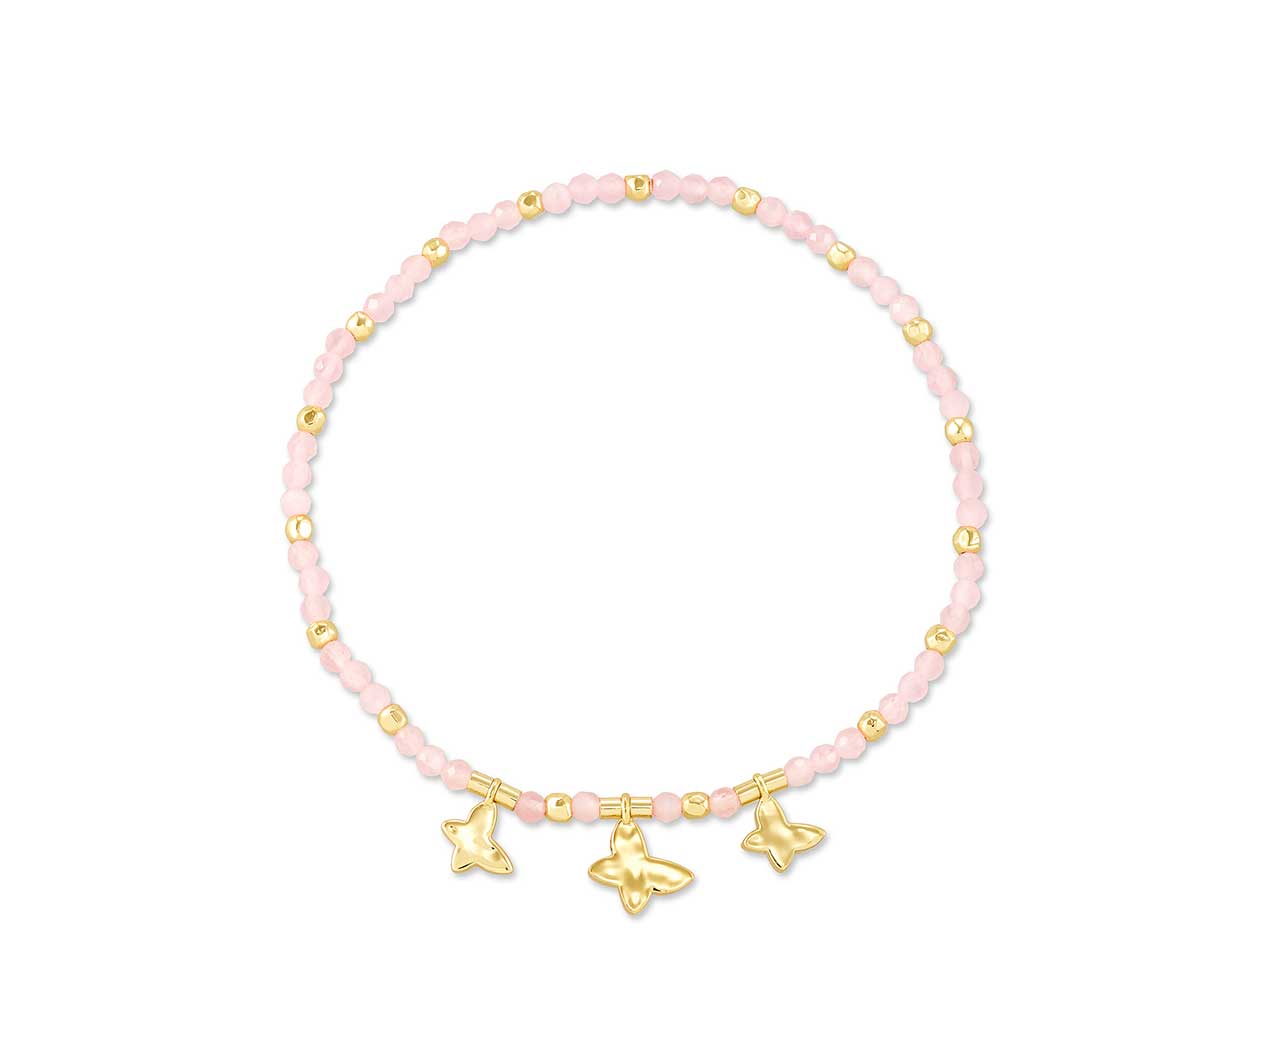 kendra-scott-butterfly-stretch-bracelet-gold-pink-catseye-glass-beads-white-cz-00-lg---Emily-Miller.jpg